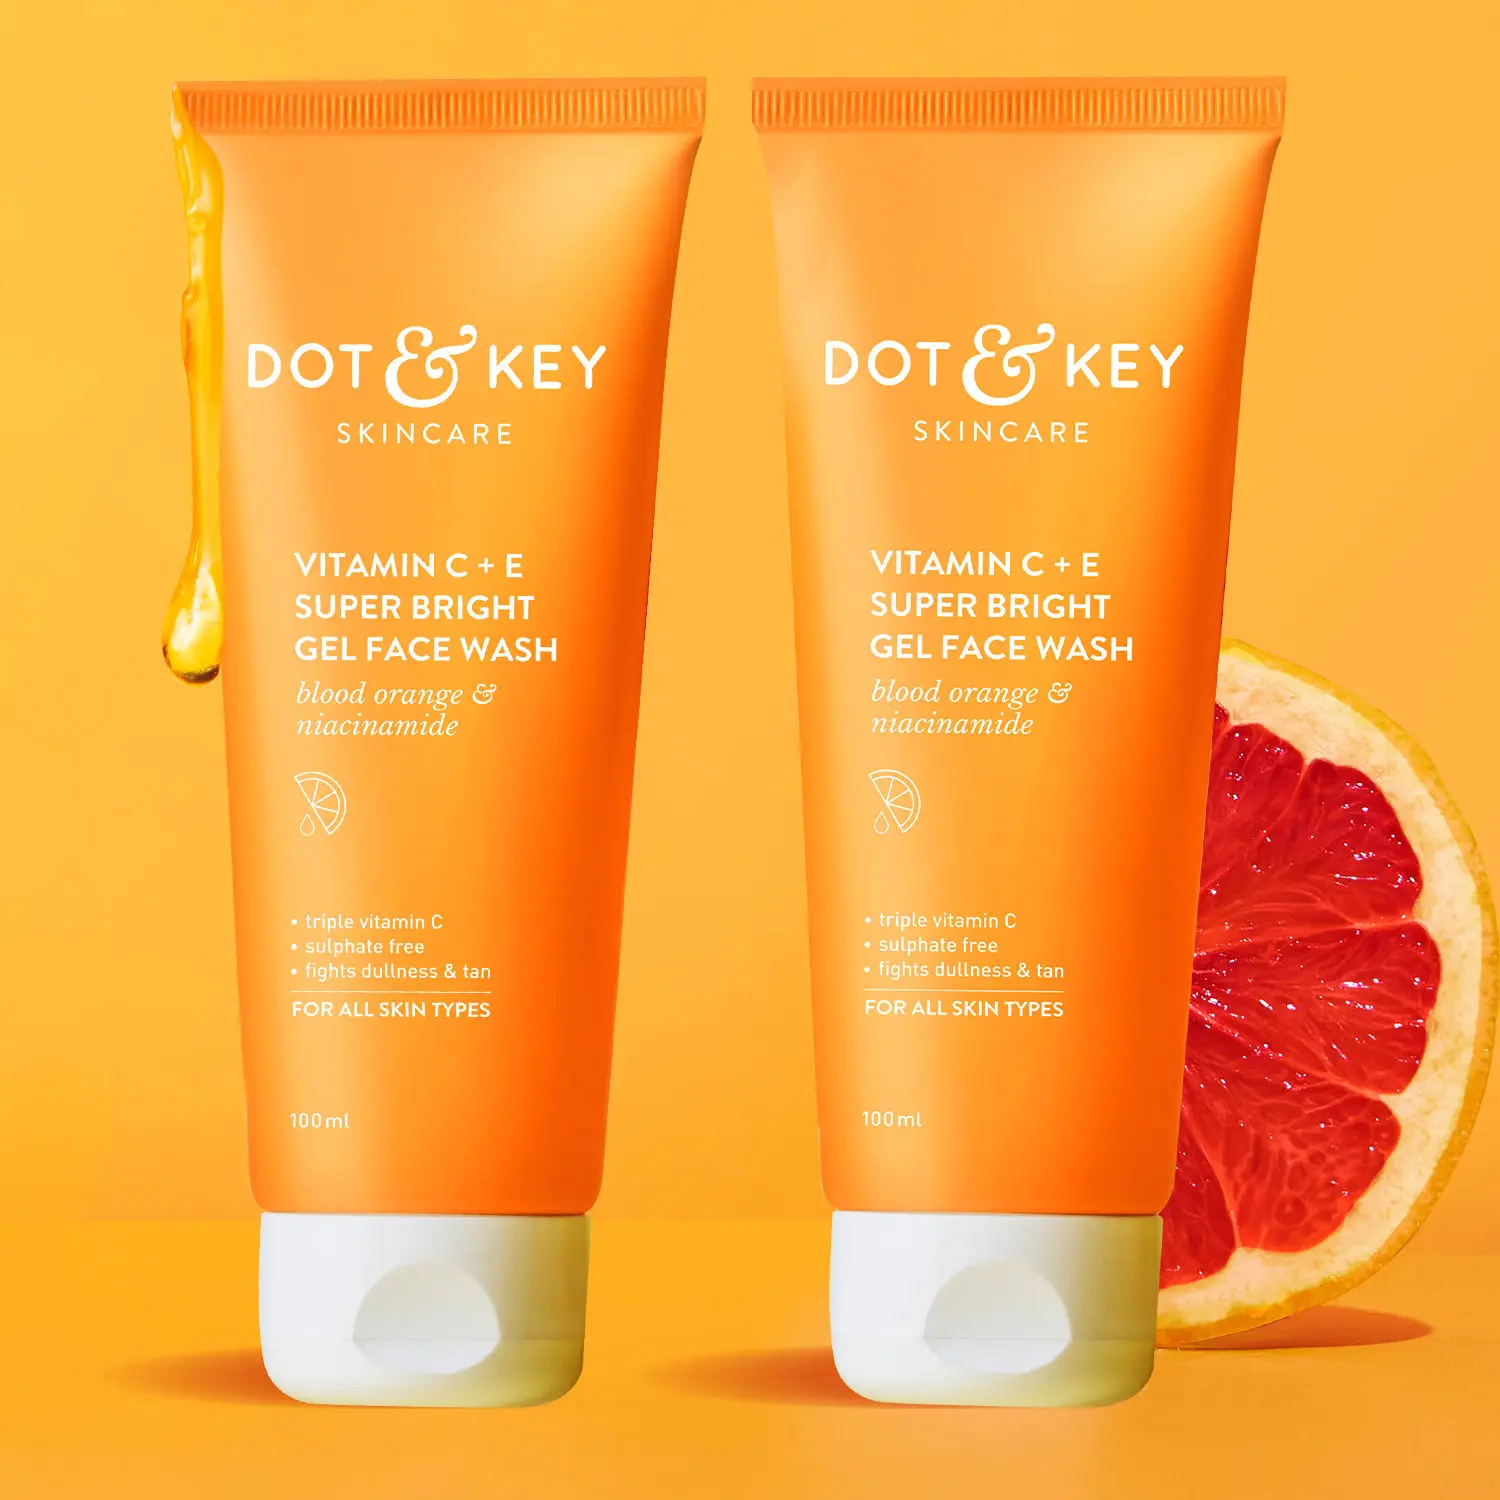 Dot & Key Vitamin C + E Super Bright Gel Face Wash 100ml - Pack of 2